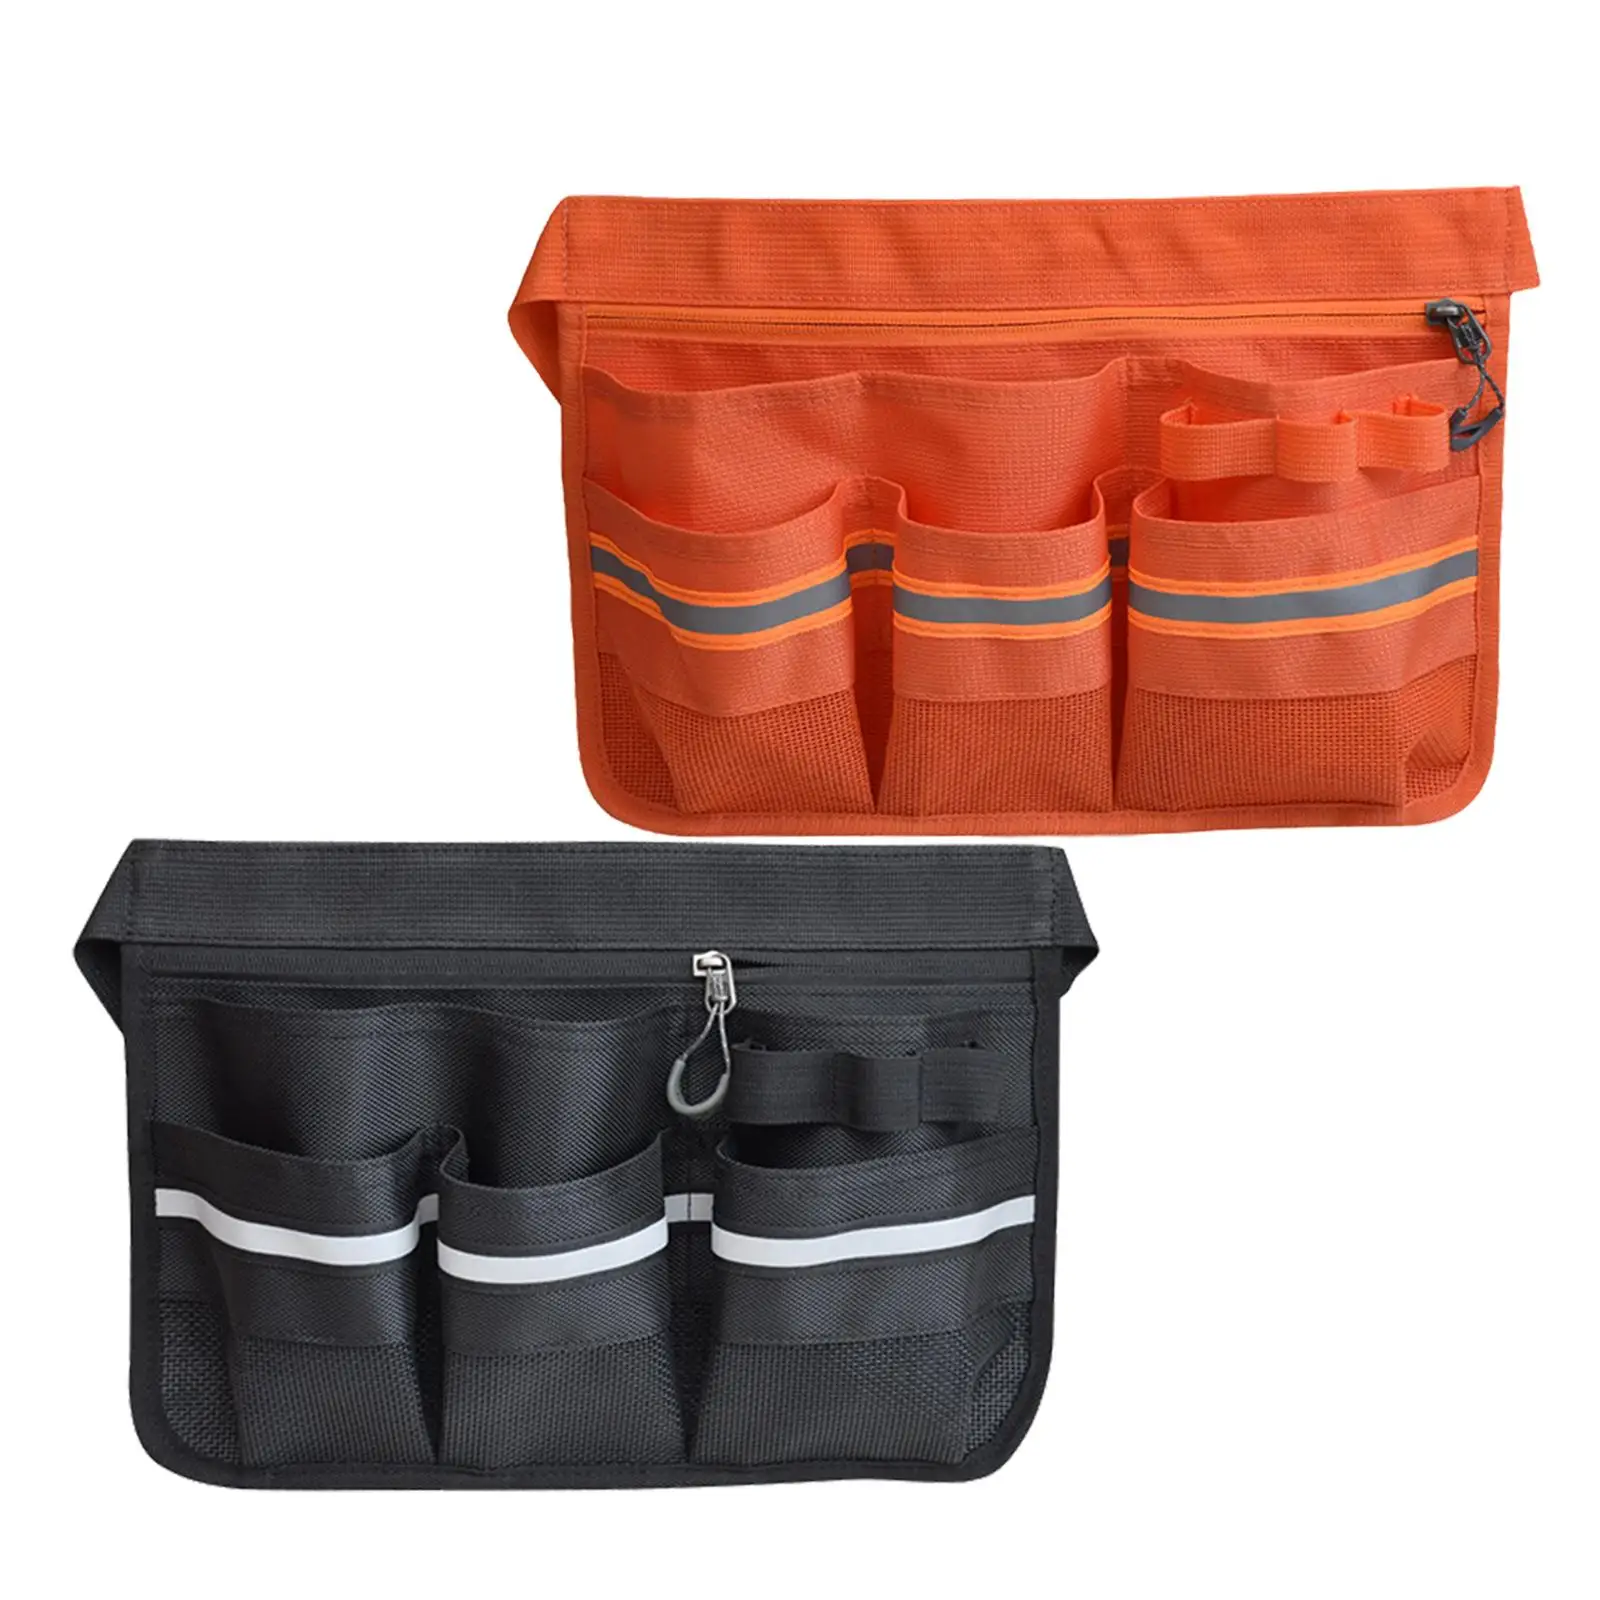 Tool Bag with Pockets Waterproof Oxford Cloth Sturdy Gardener Pouch Waist Belt for Cleaning Gardening KTV Hotel Restaurant